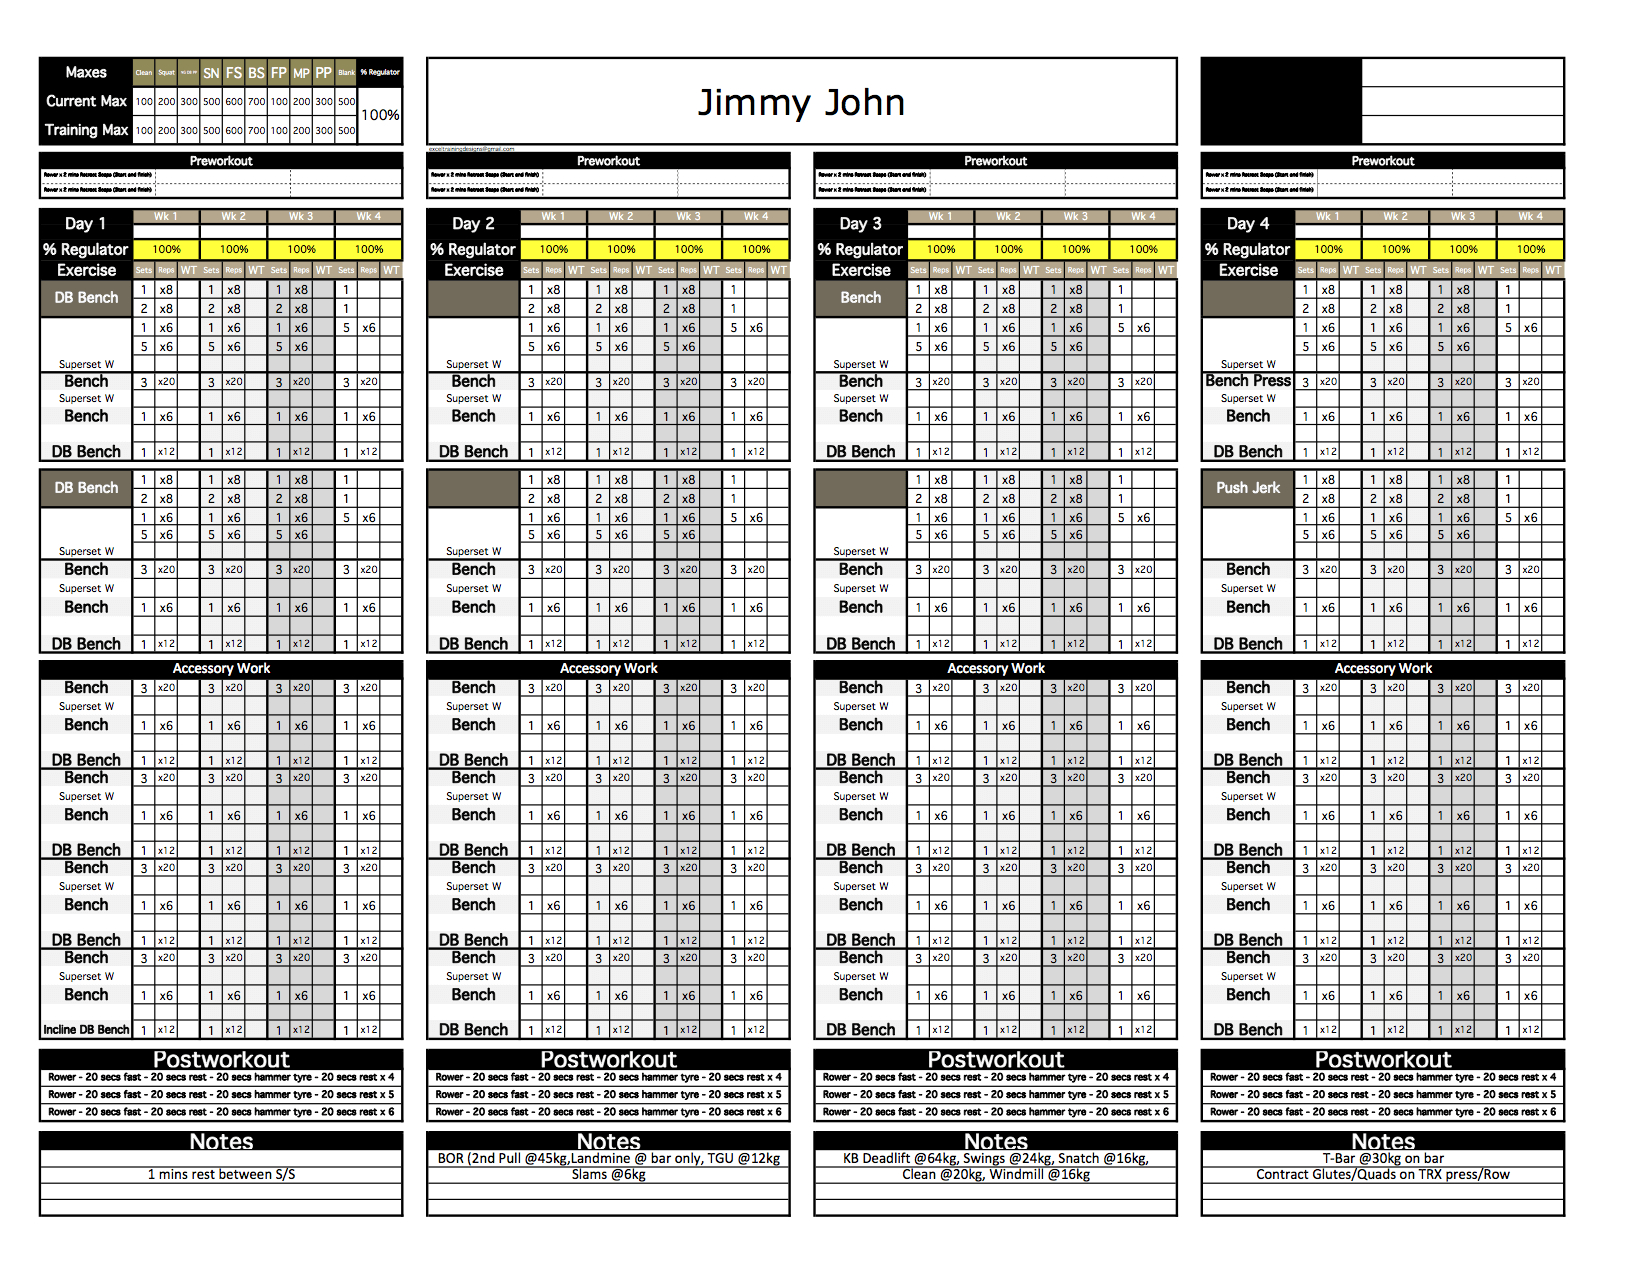 weight-training-spreadsheet-template-spreadsheet-downloa-weightlifting-spreadsheet-example